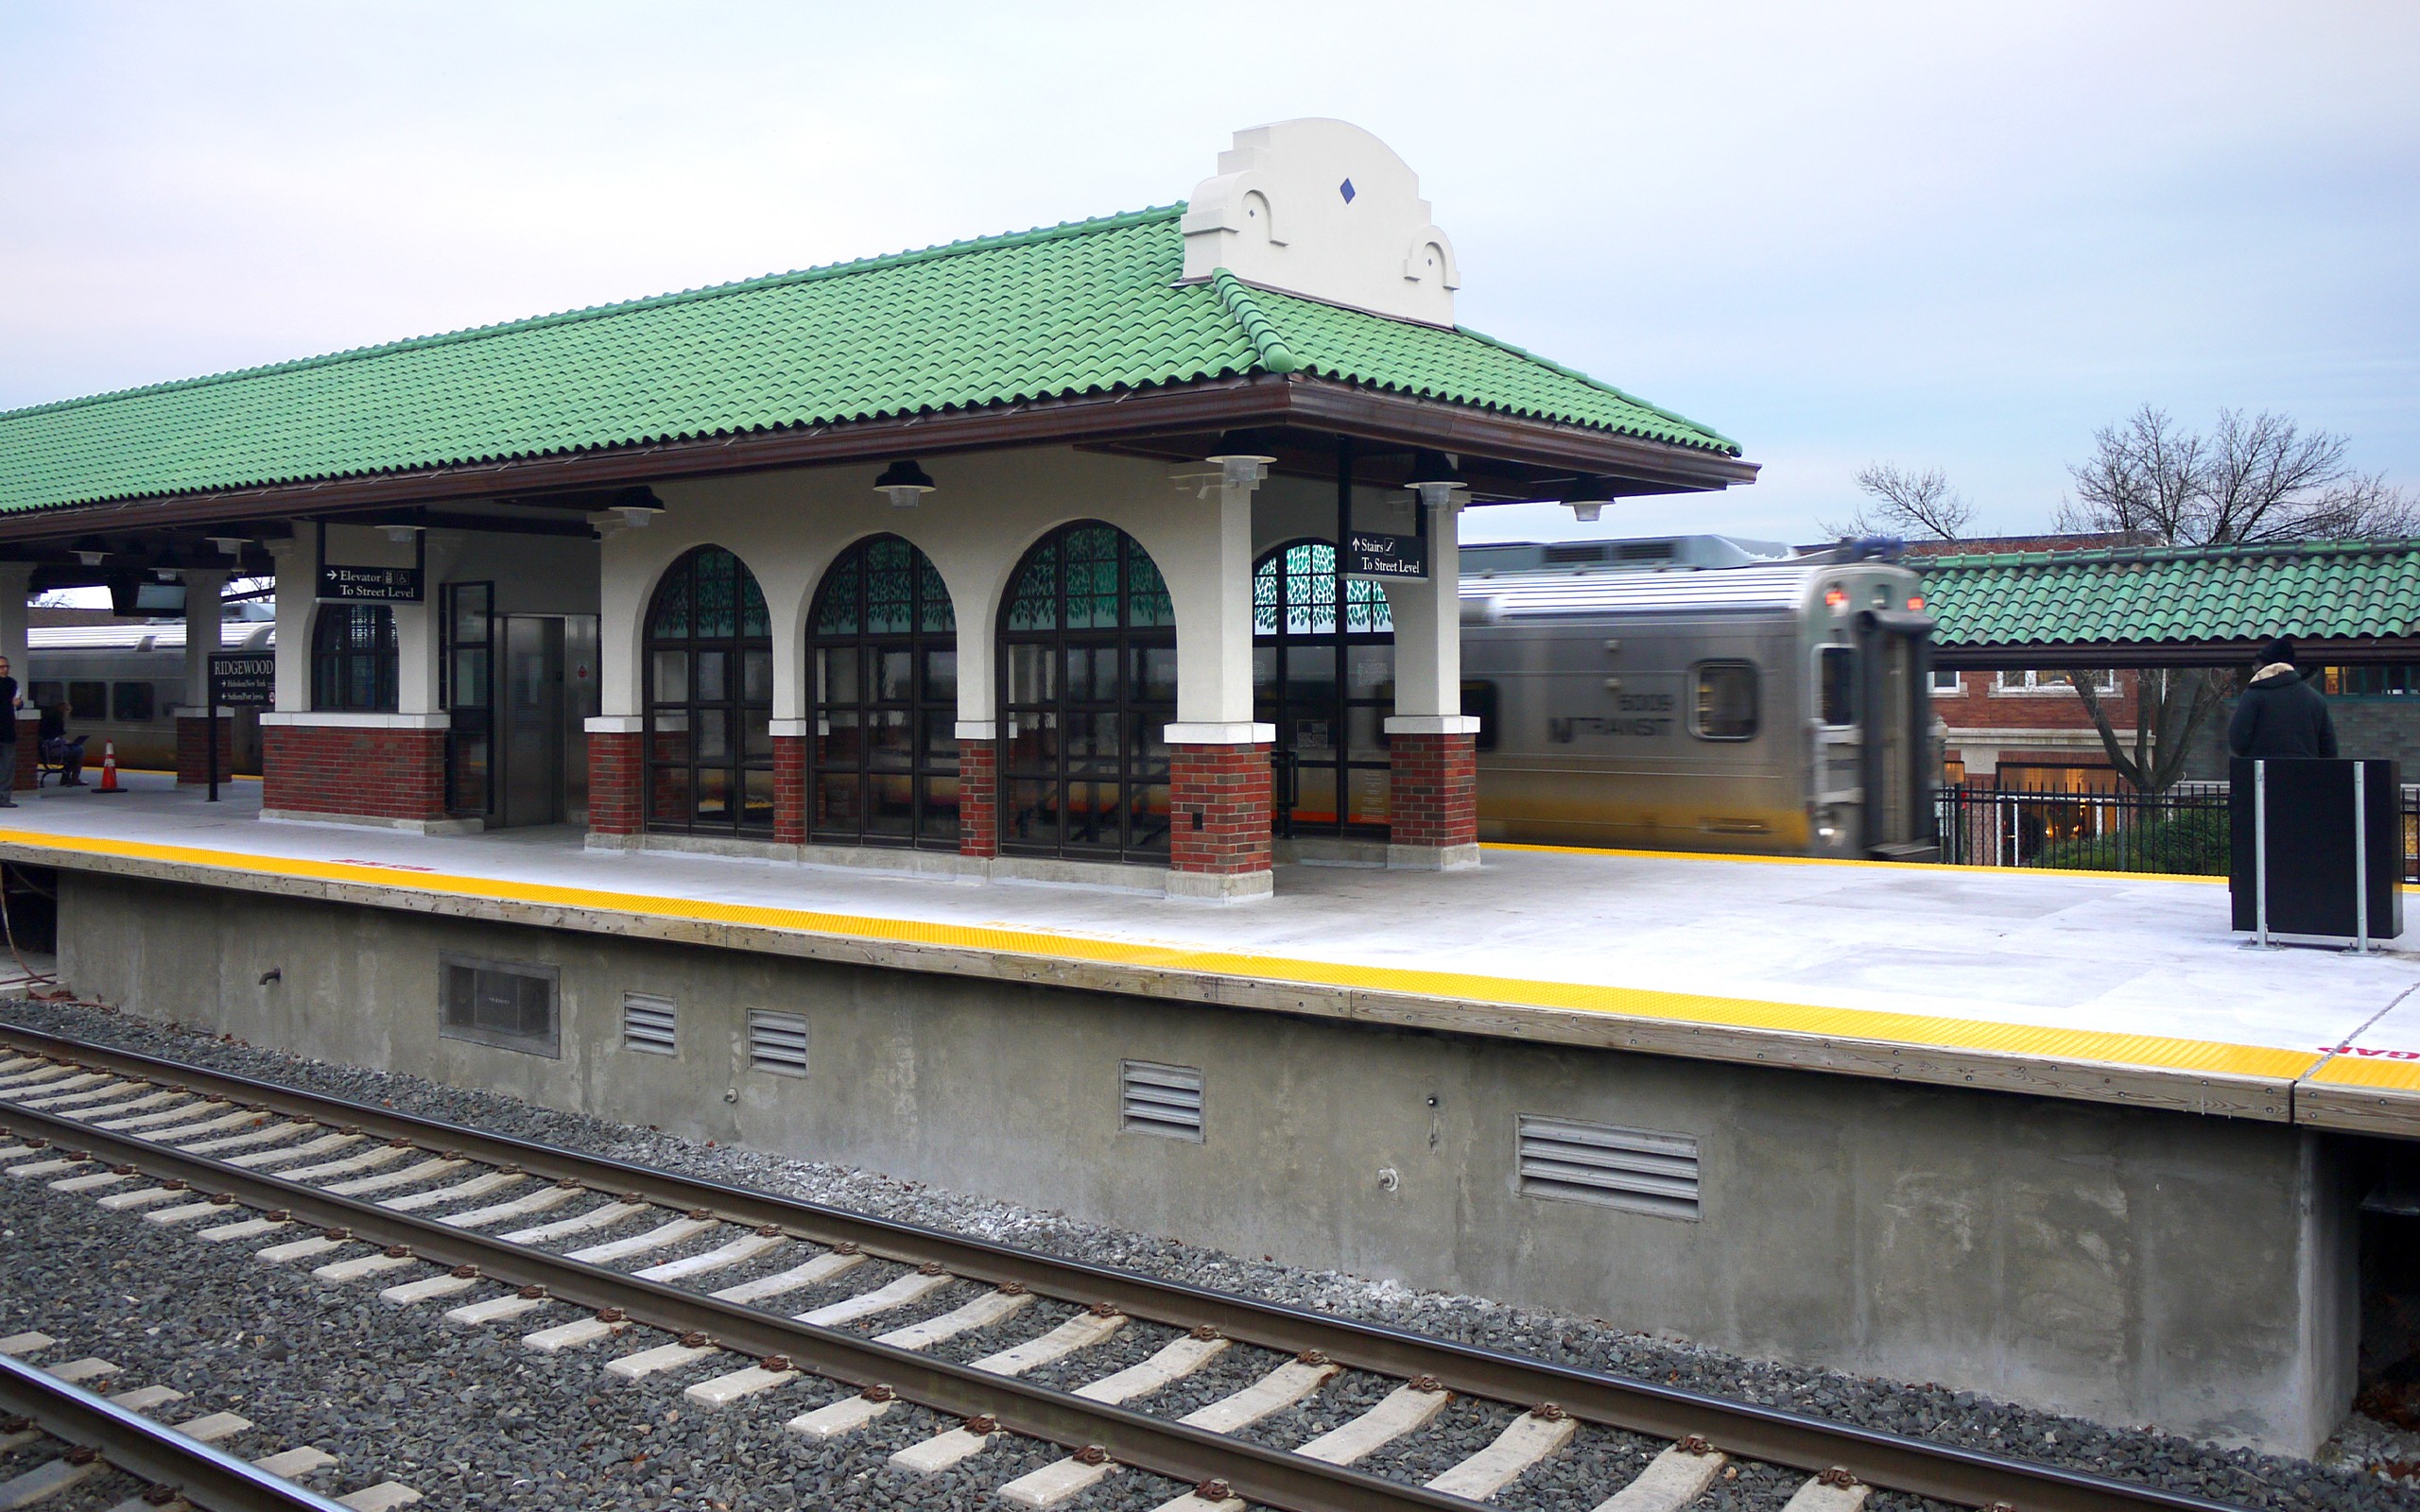 Ridgewood Station tracks and platform